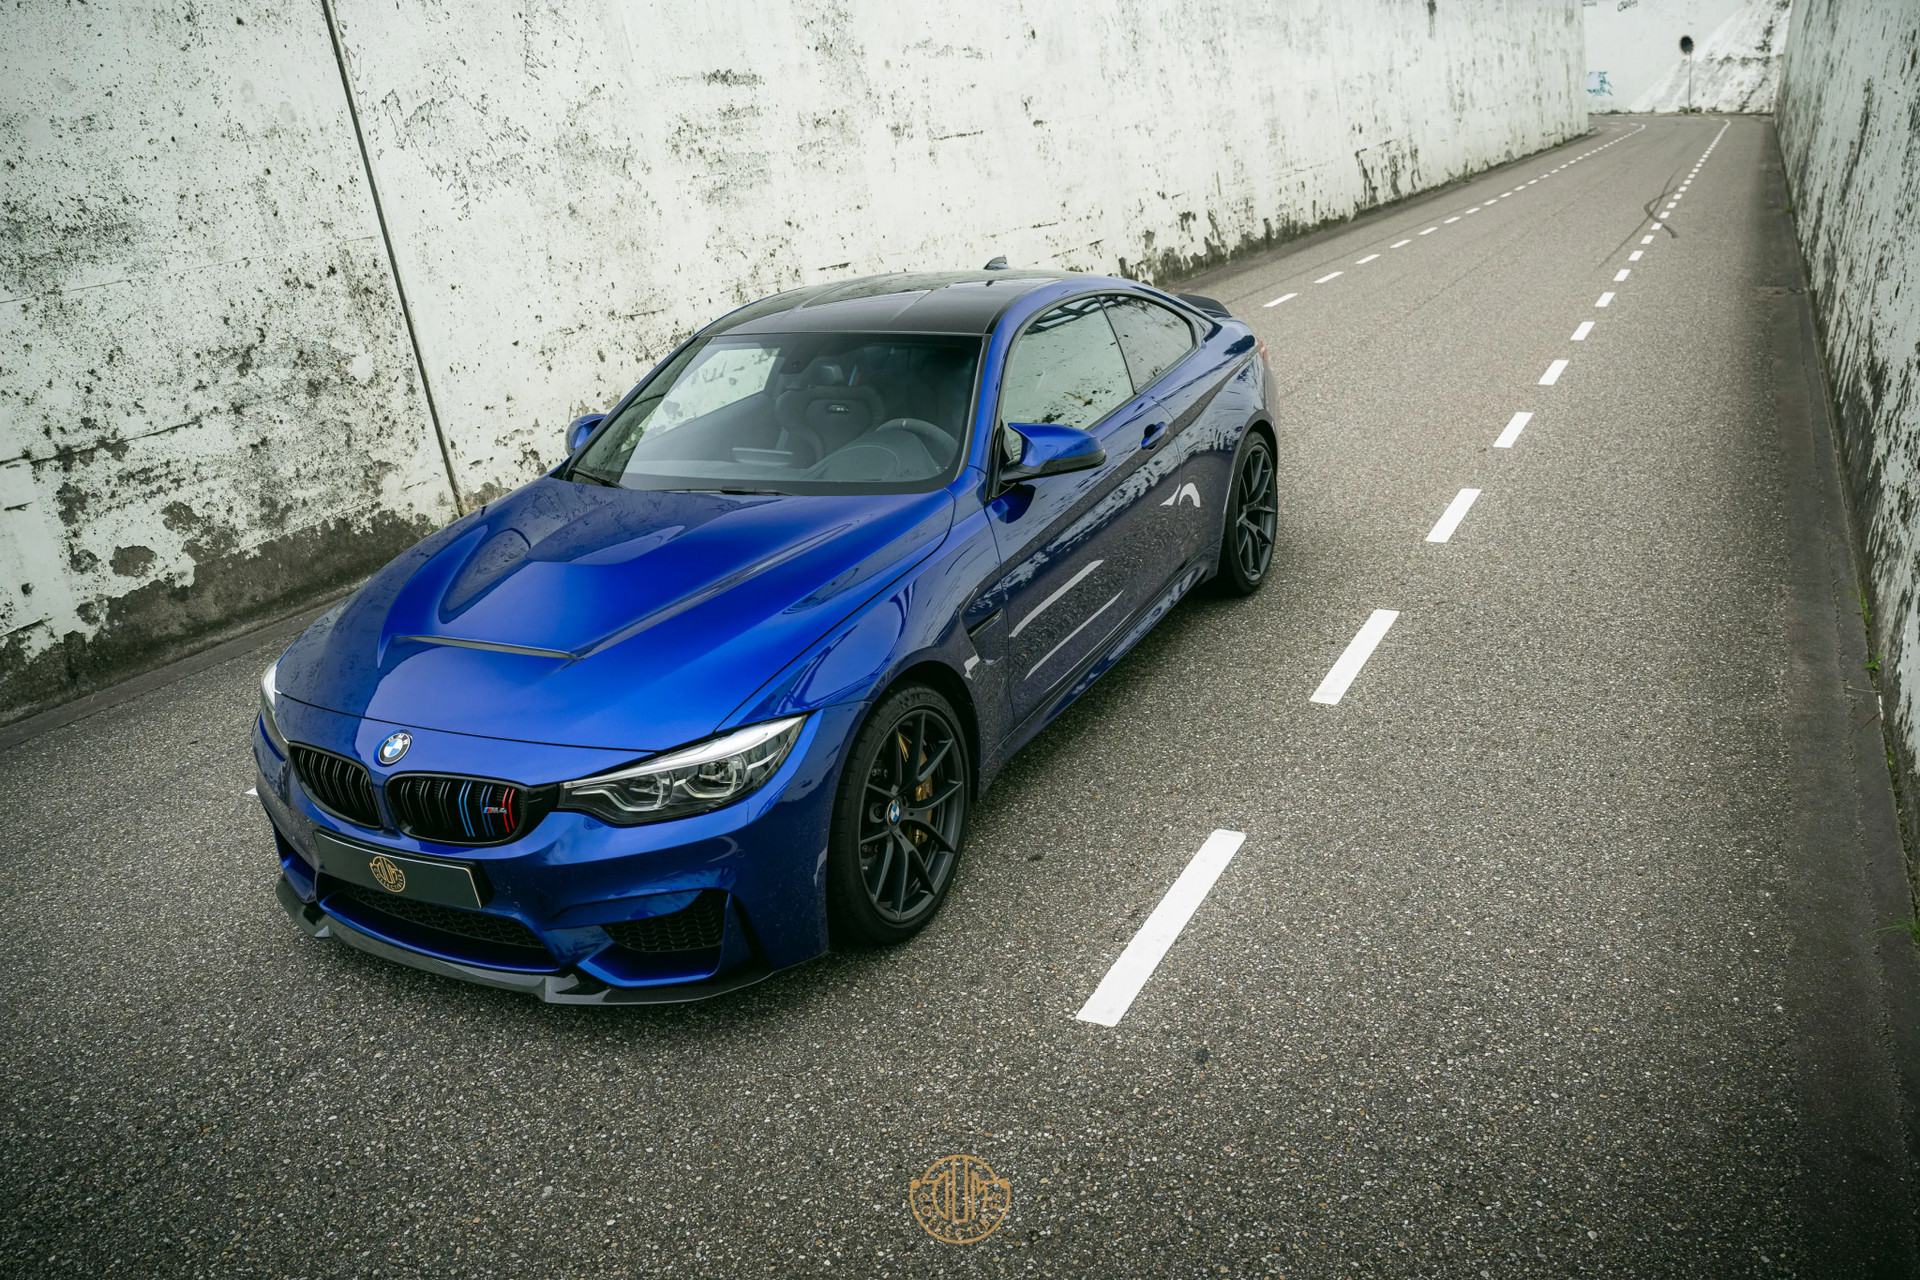 BMW 4 Serie Coupé M4 CS 2017 San marino blau metallic 18